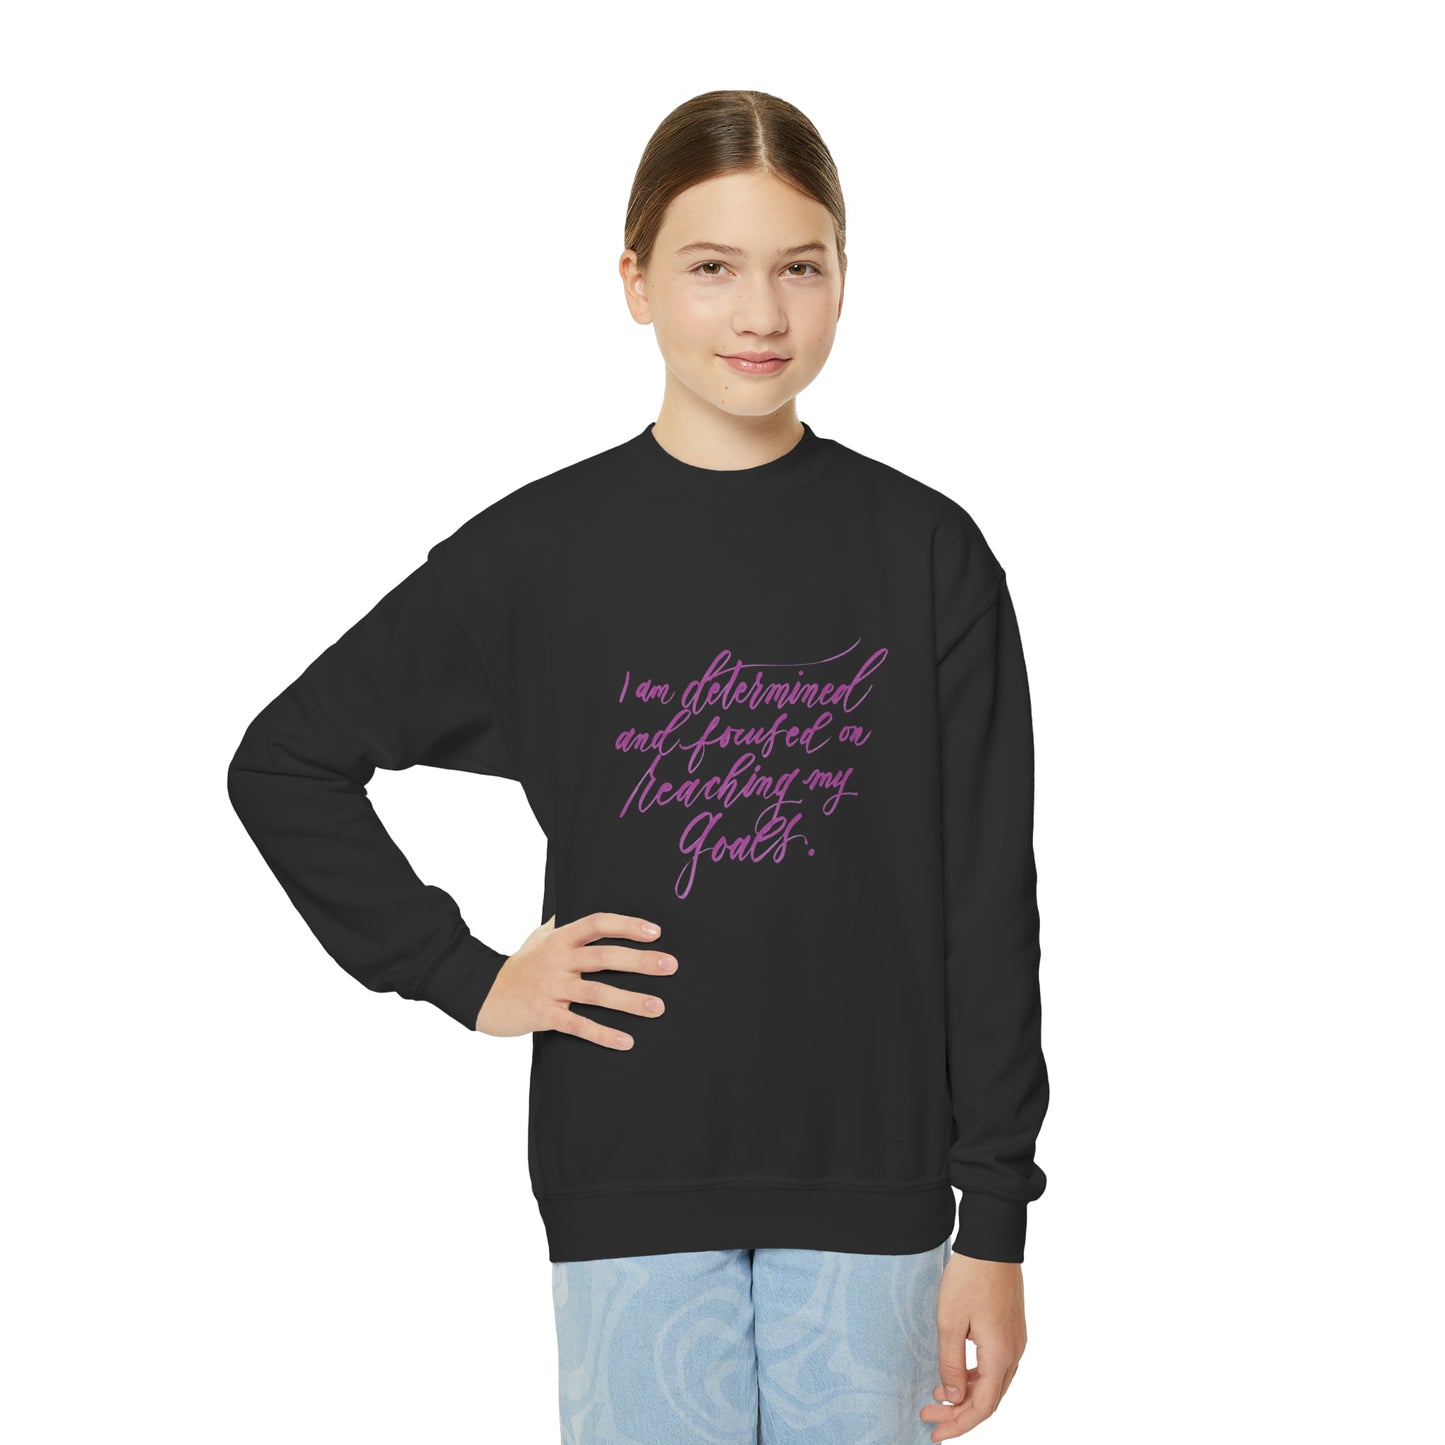 Determined Kids Sweatshirt - "I am determined..." Calligraphy Cotton Blend YOUTH Sweatshirt - I am Empowered #01